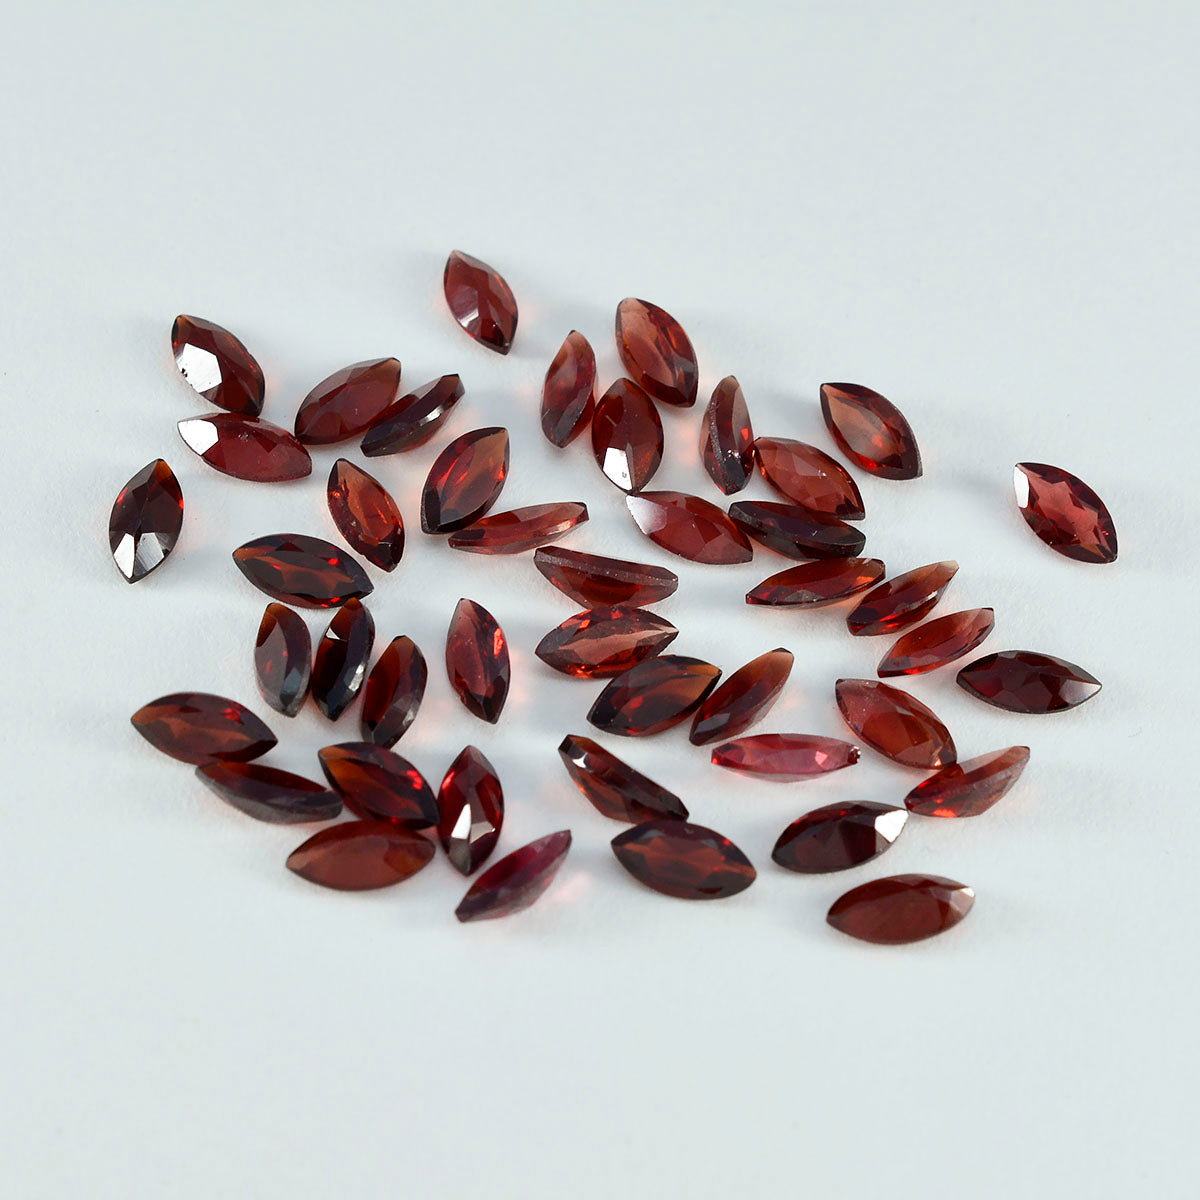 Riyogems 1 Stück echter roter Granat, facettiert, 3 x 6 mm, Marquise-Form, süßer, hochwertiger loser Stein